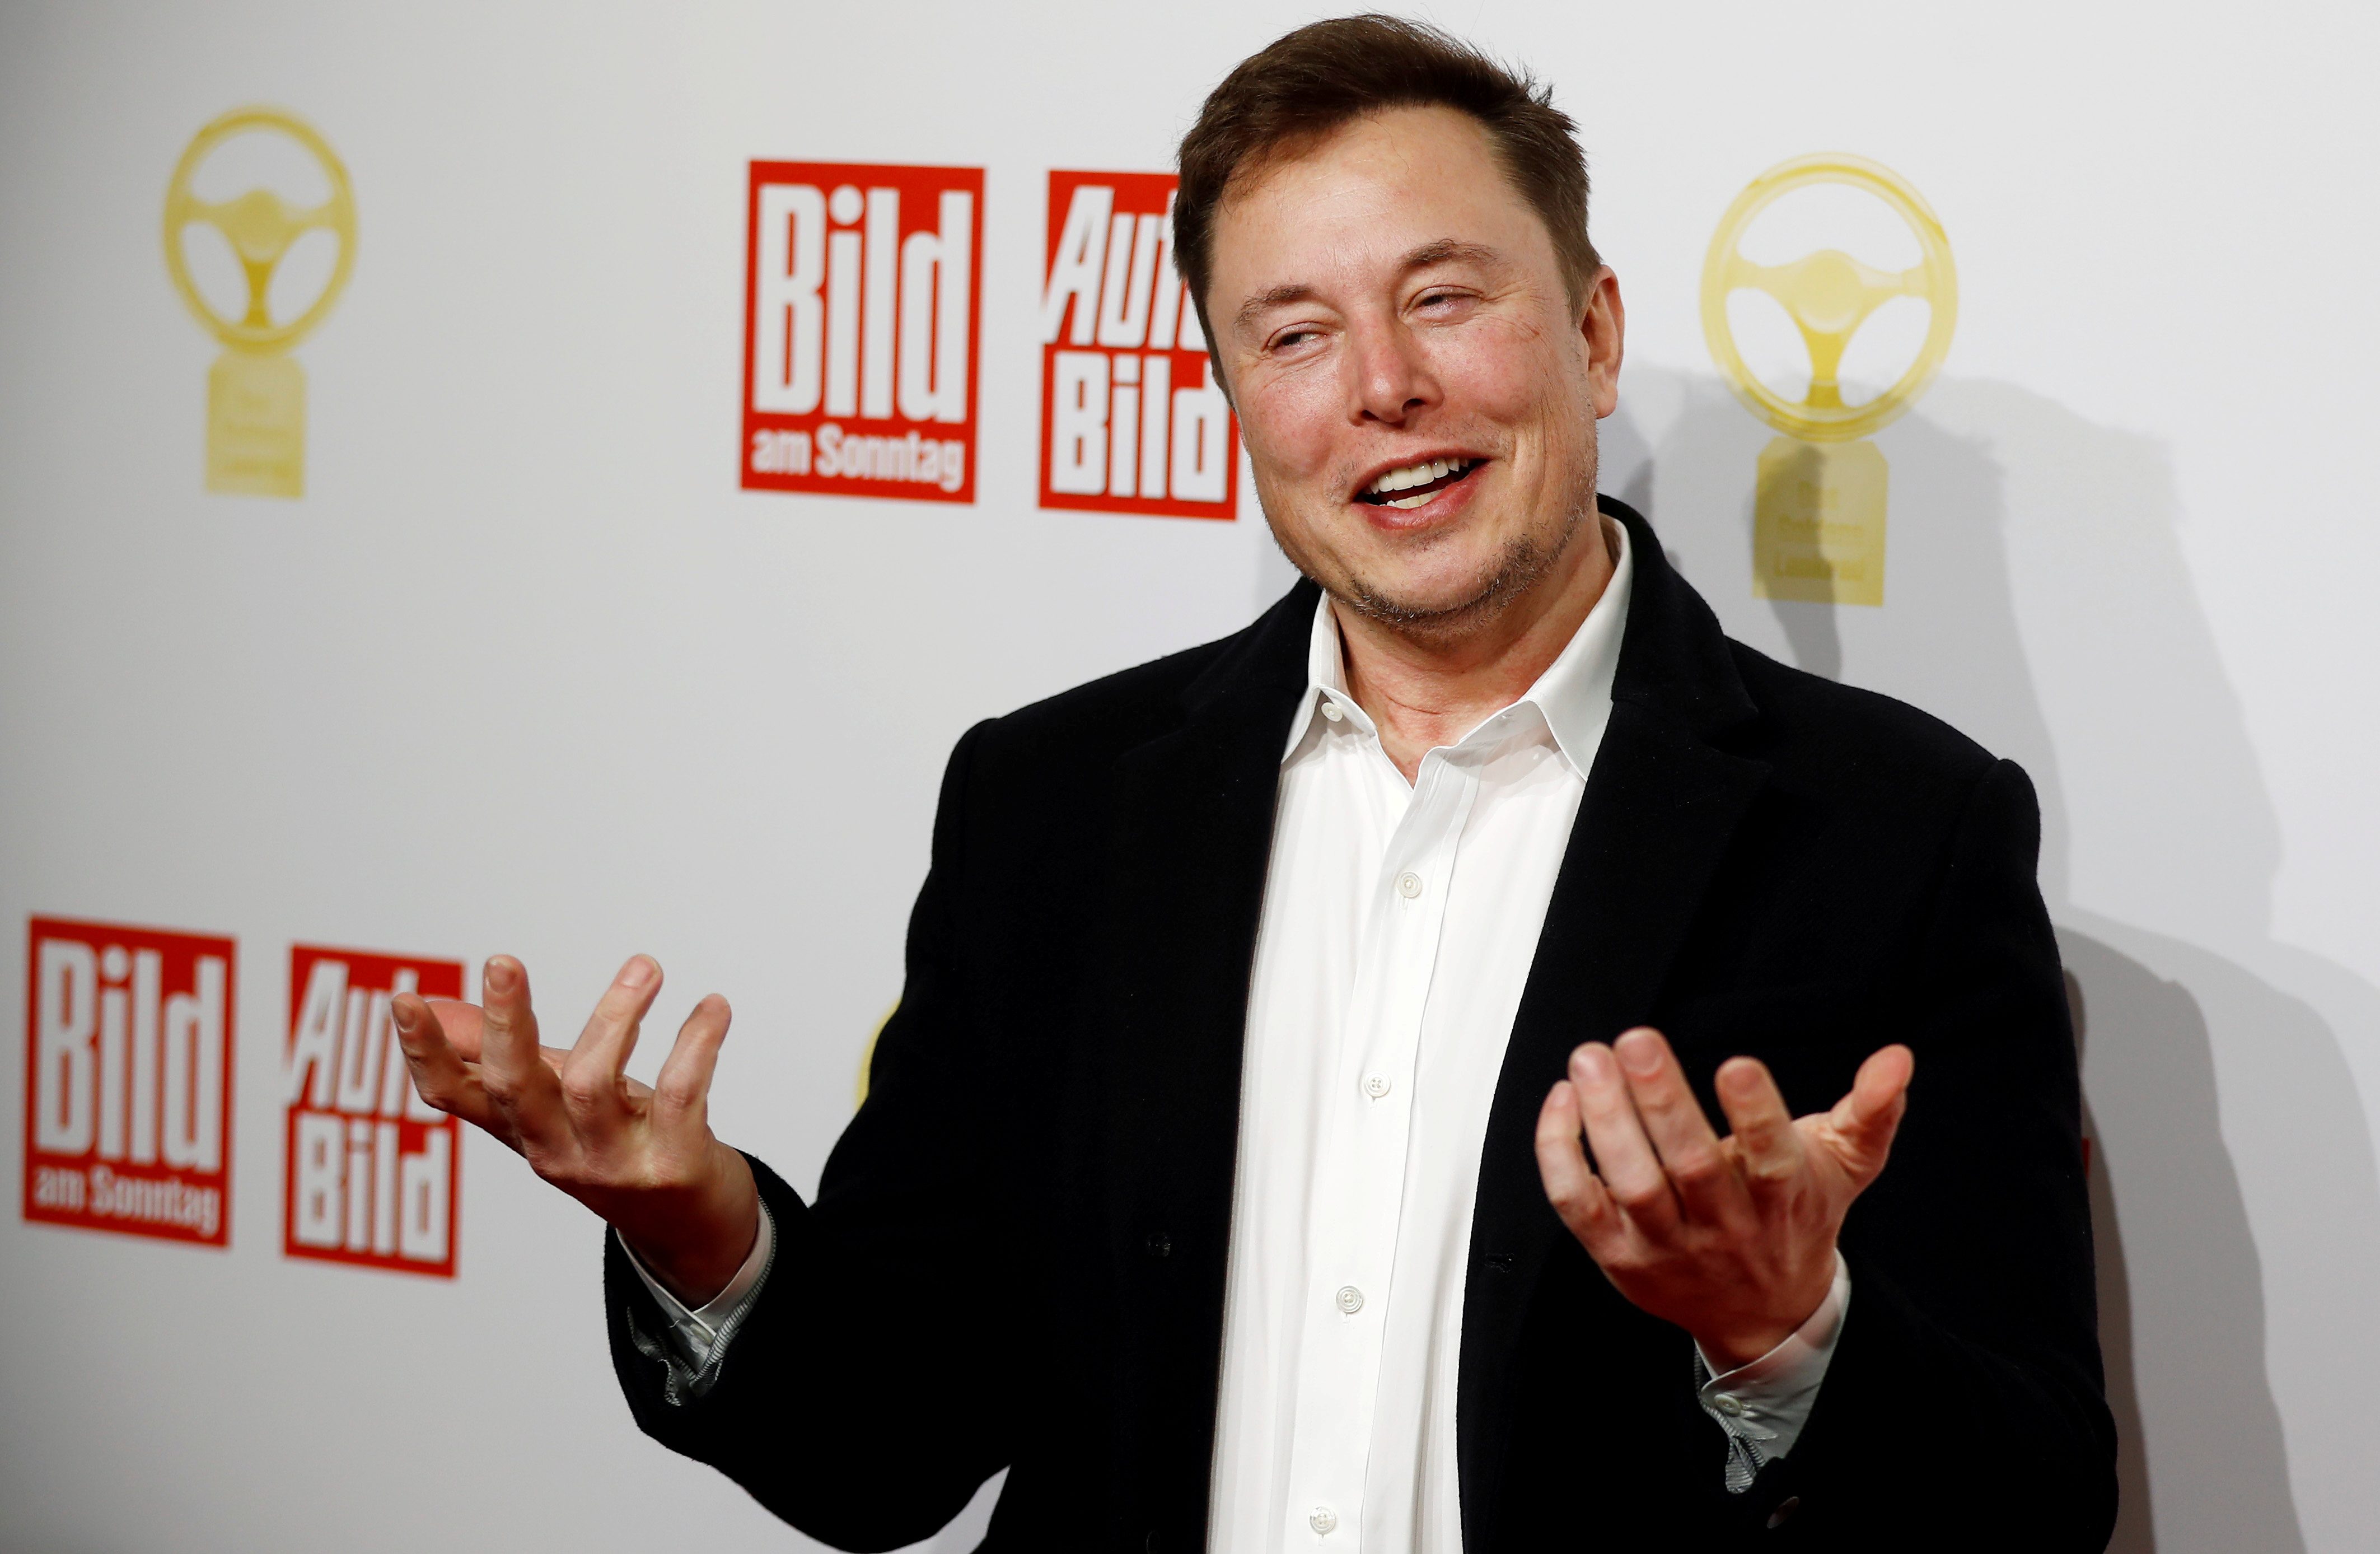 Elon Musk reveals he has Asperger’s in ‘SNL’ appearance